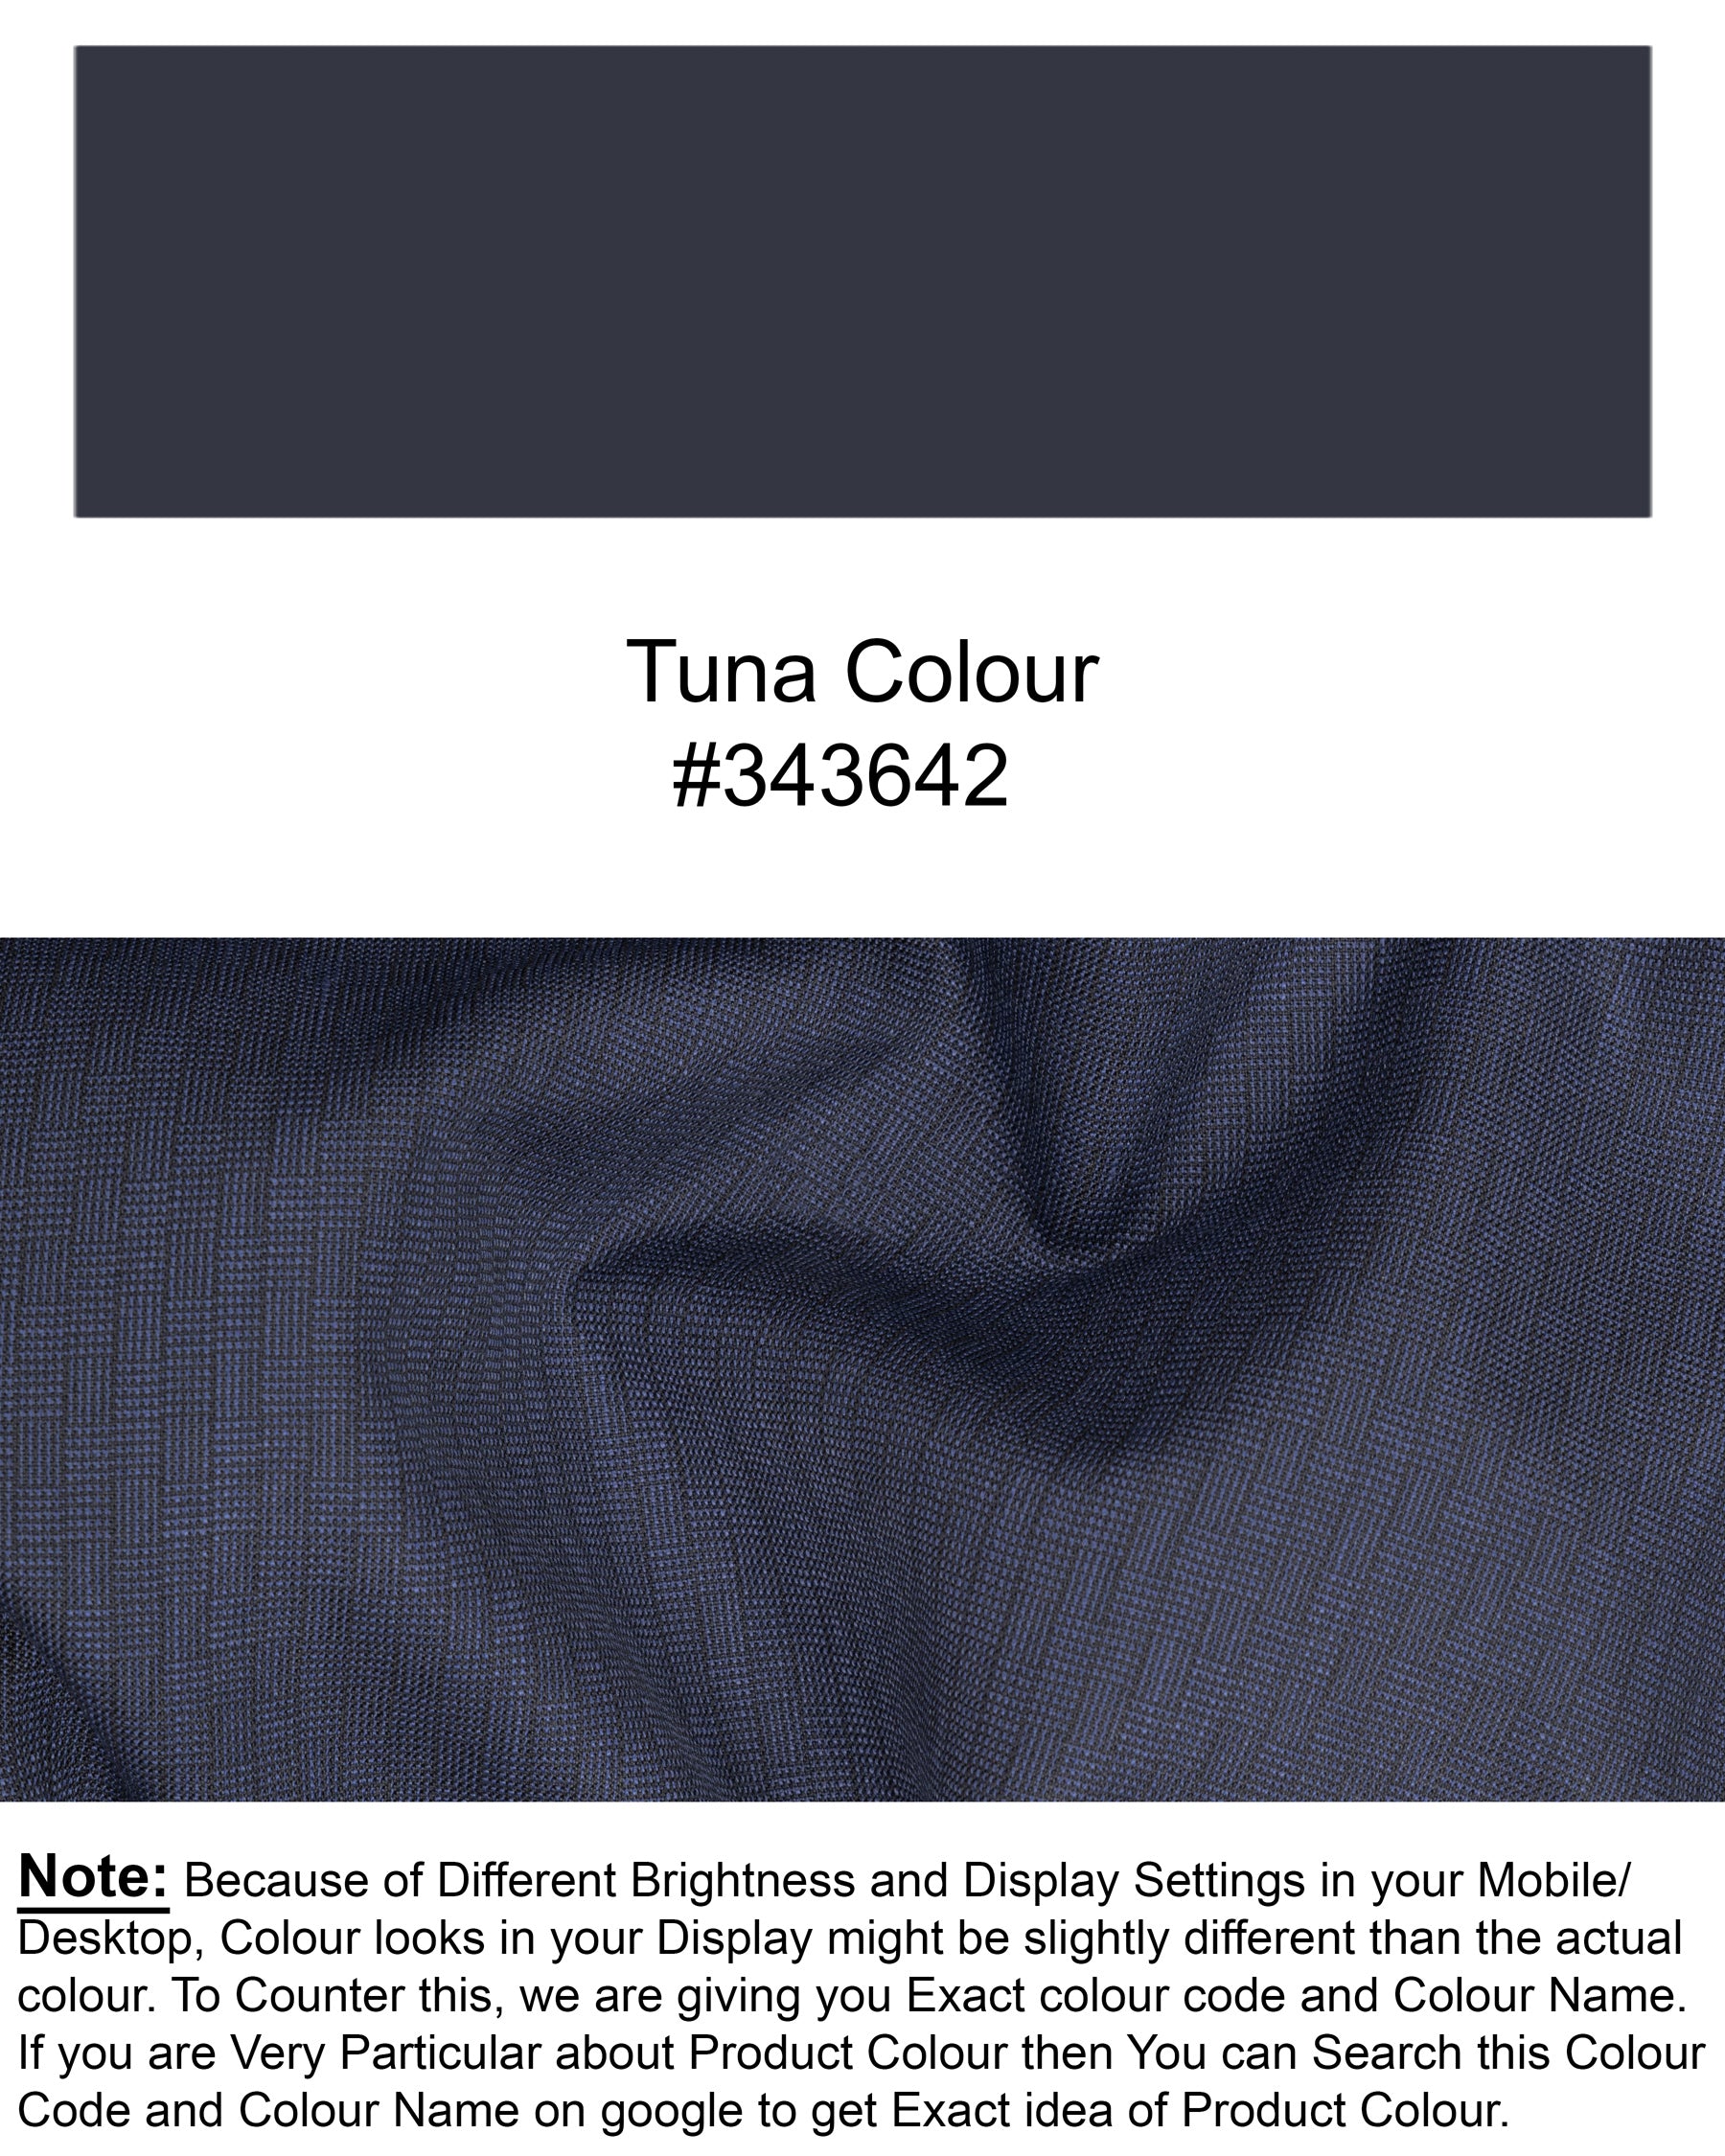 Tuna Blue Premium Cotton Designer Sports Blazer BL1749-SB-D37-36,BL1749-SB-D37-38,BL1749-SB-D37-40,BL1749-SB-D37-42,BL1749-SB-D37-44,BL1749-SB-D37-46,BL1749-SB-D37-48,BL1749-SB-D37-50,BL1749-SB-D37-52,BL1749-SB-D37-54,BL1749-SB-D37-56,BL1749-SB-D37-58,BL1749-SB-D37-60